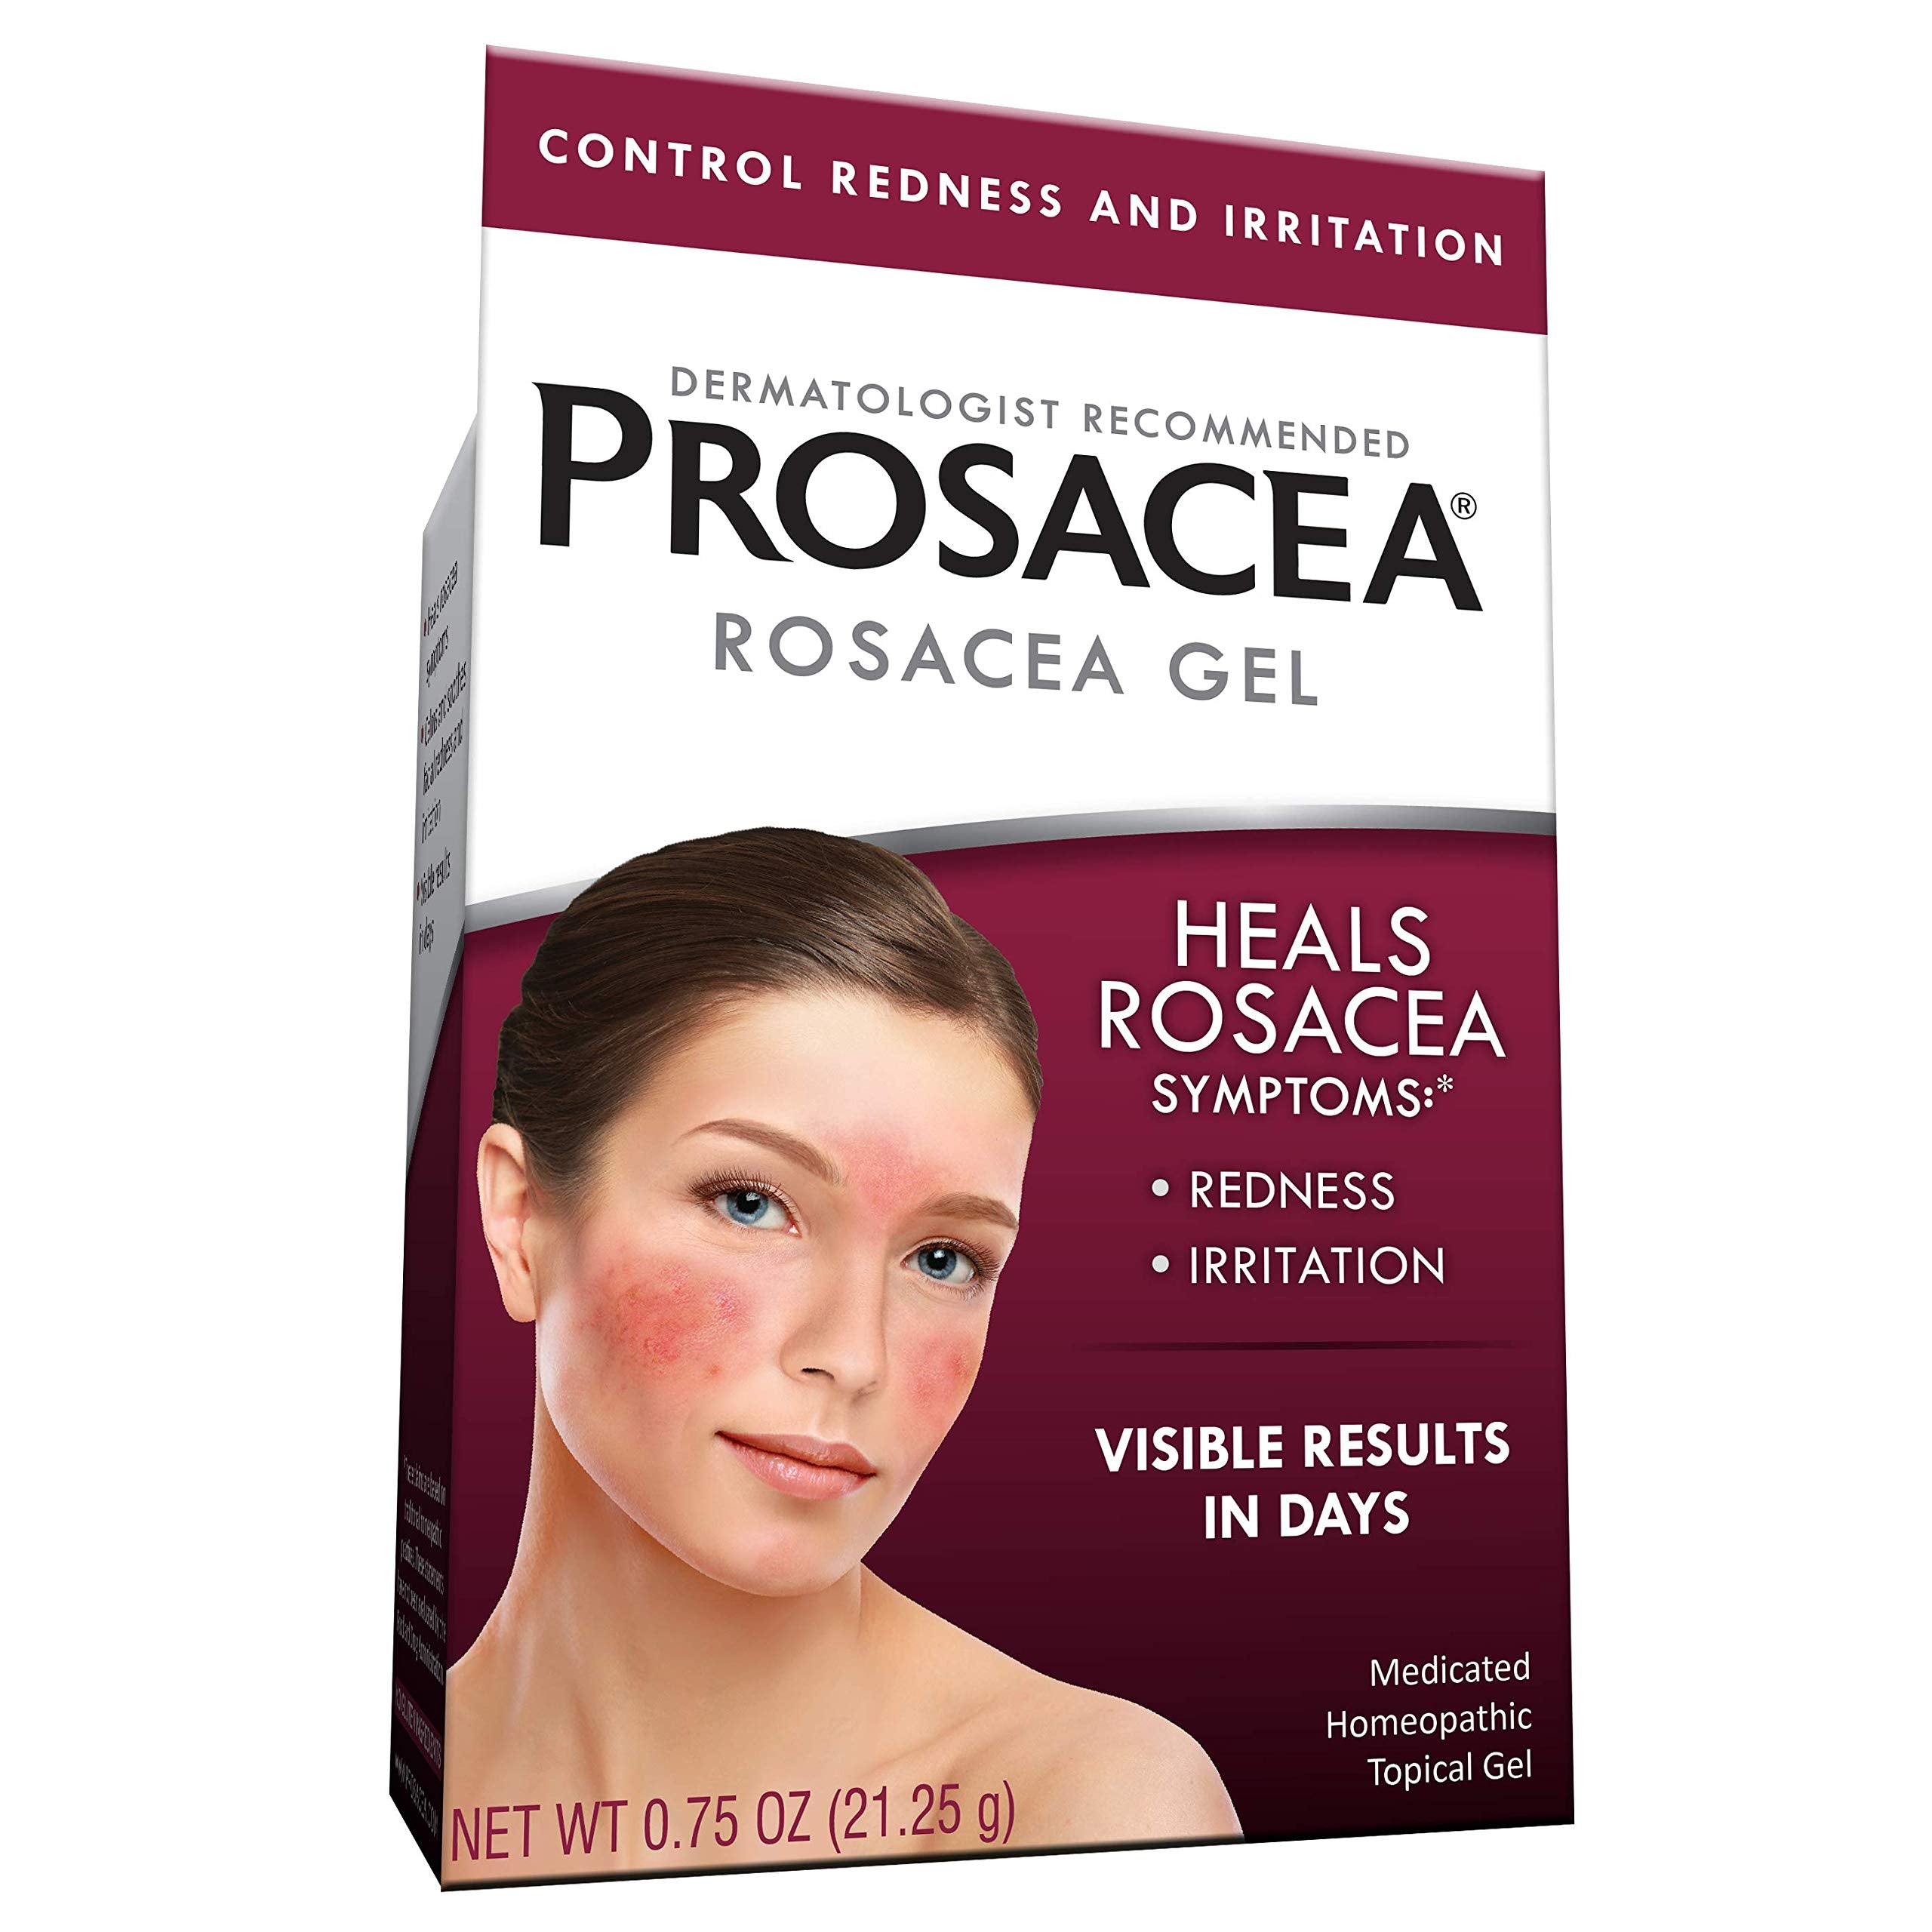 Prosacea - Heals Rosacea Symptoms of Redness, Pimples and Irritation - 0.75 oz